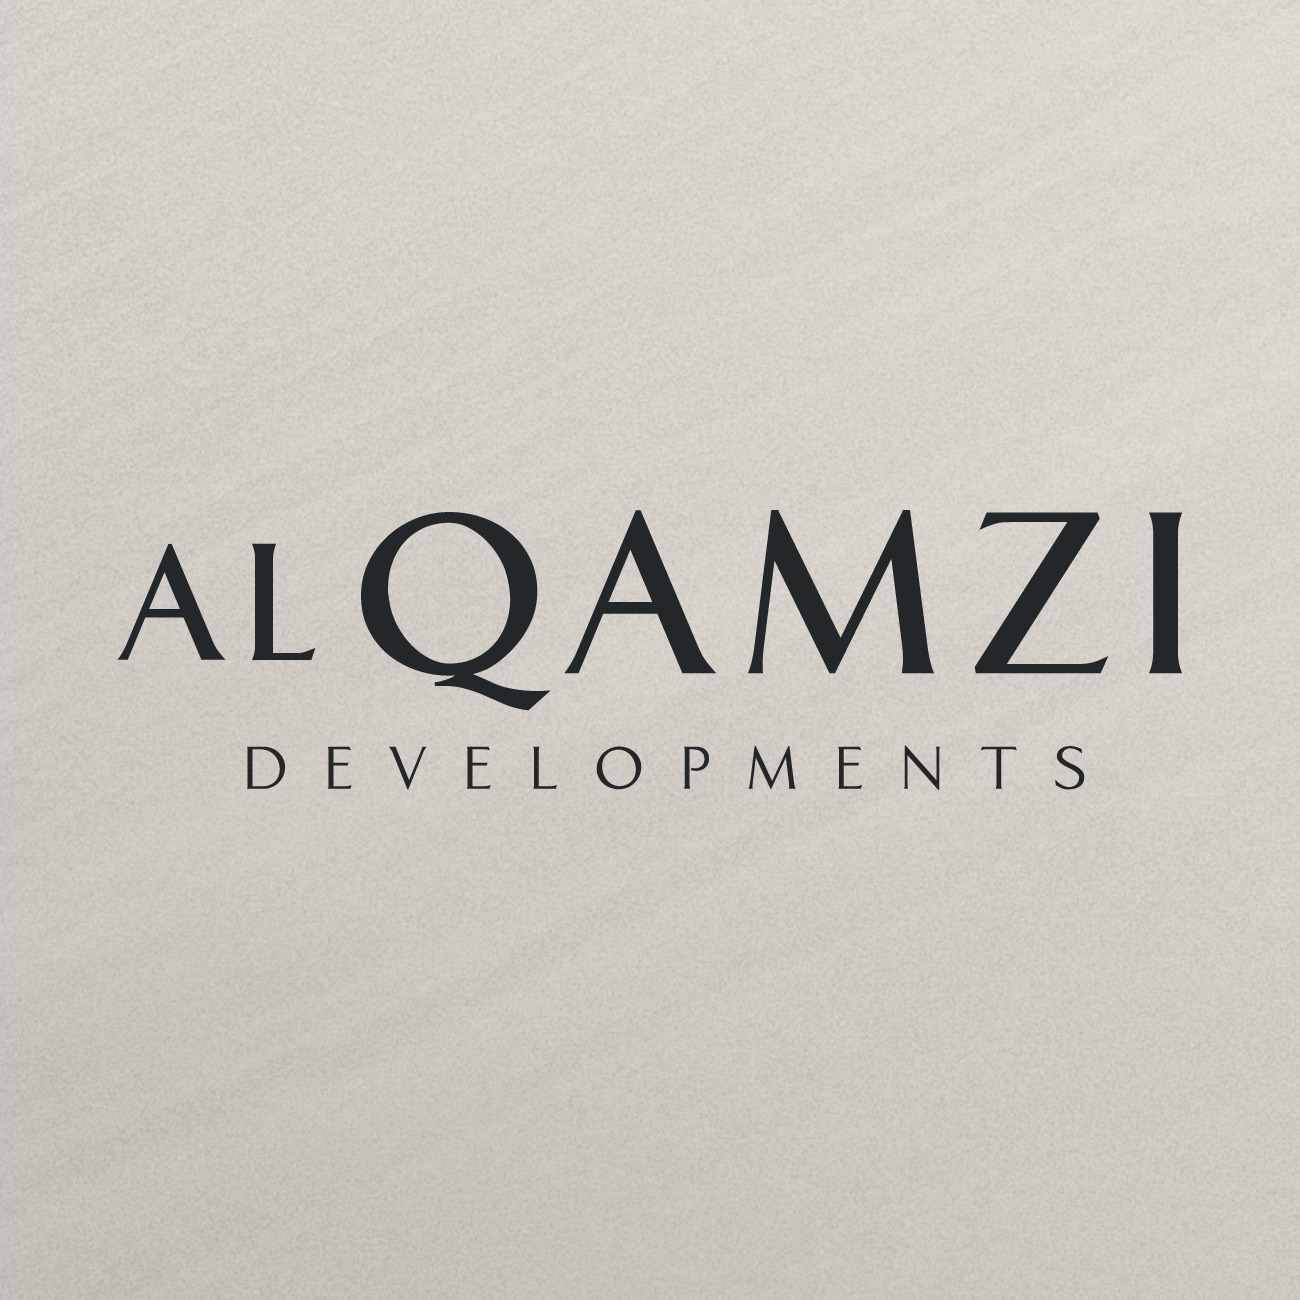 Developer: Al Qamzi Developments